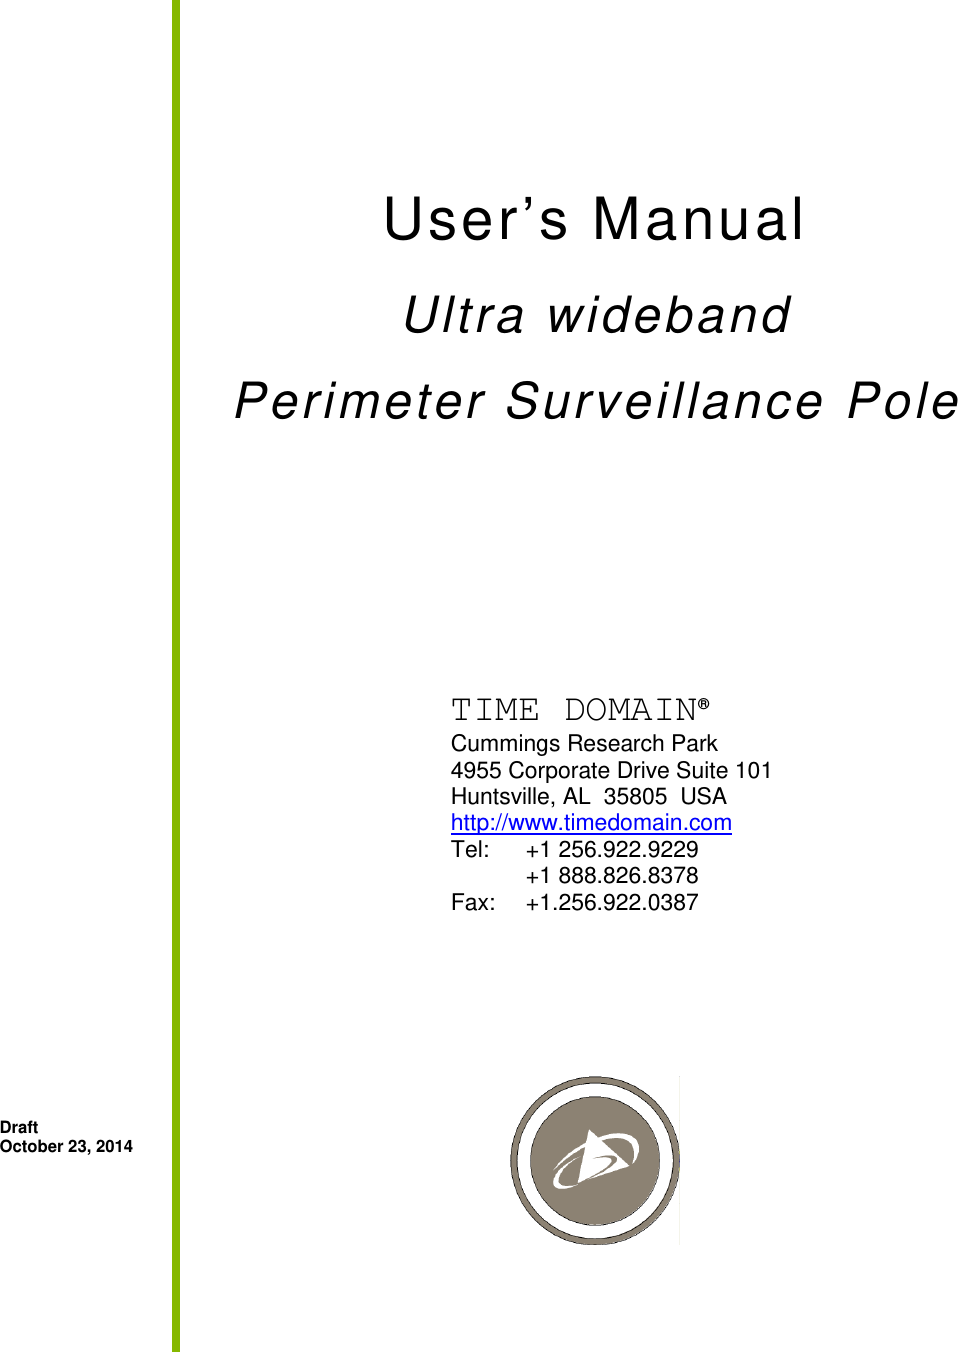   User’s Manual Ultra wideband  Perimeter Surveillance Pole              Draft October 23, 2014   TIME DOMAIN®   Cummings Research Park   4955 Corporate Drive Suite 101   Huntsville, AL  35805  USA http://www.timedomain.com Tel:   +1 256.922.9229   +1 888.826.8378  Fax:  +1.256.922.0387 